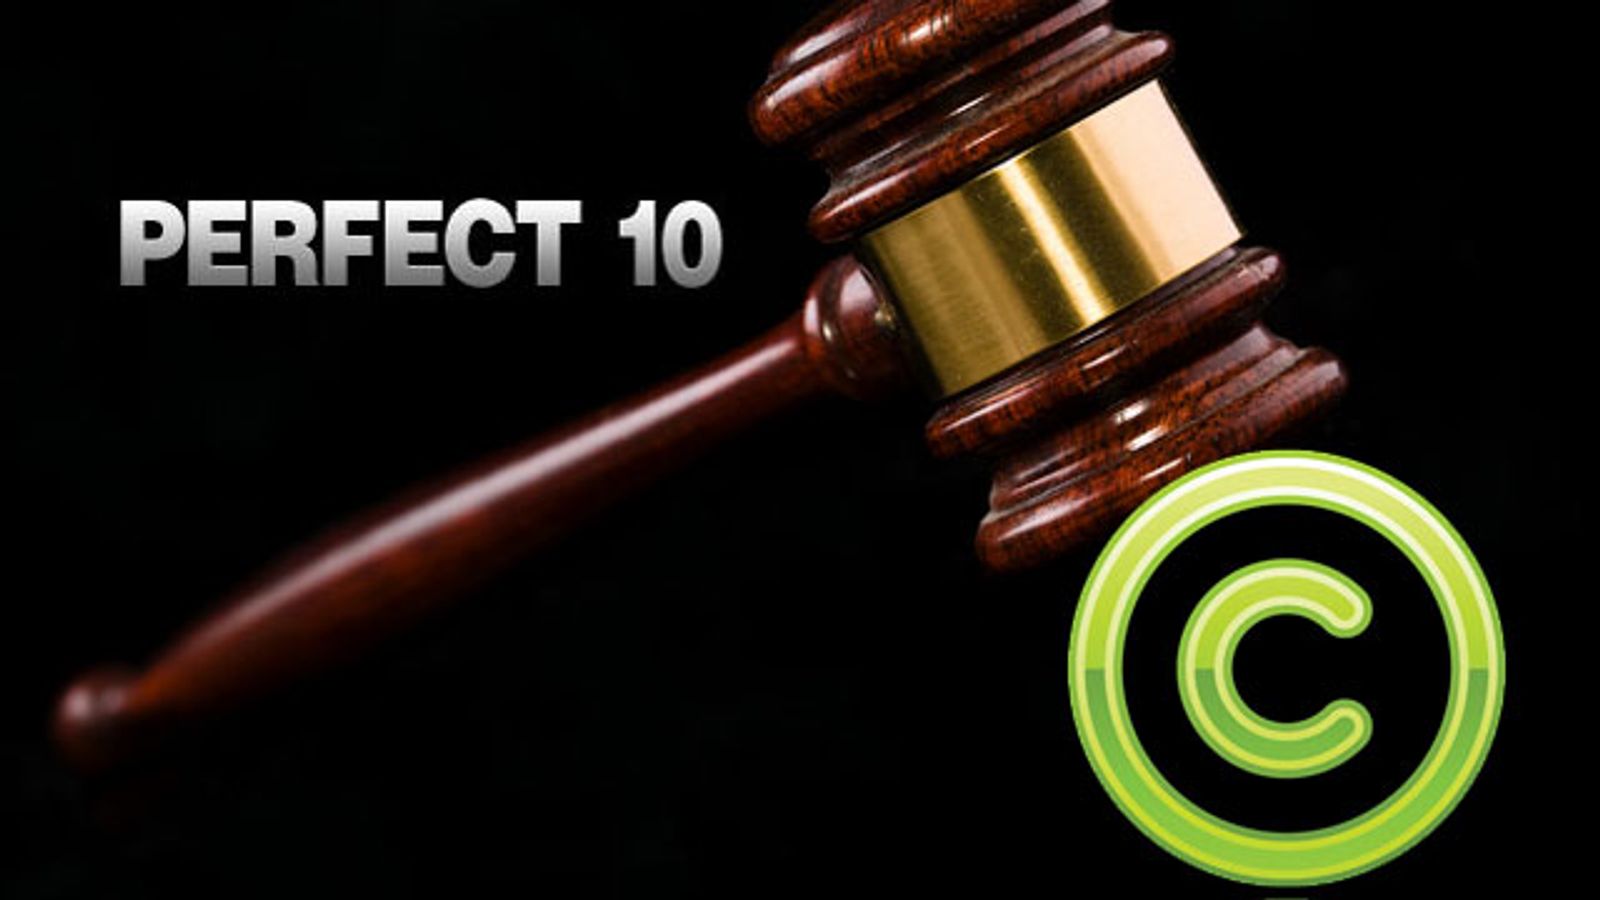 Perfect 10 Files Copyright Infringement Lawsuit Against Tumblr